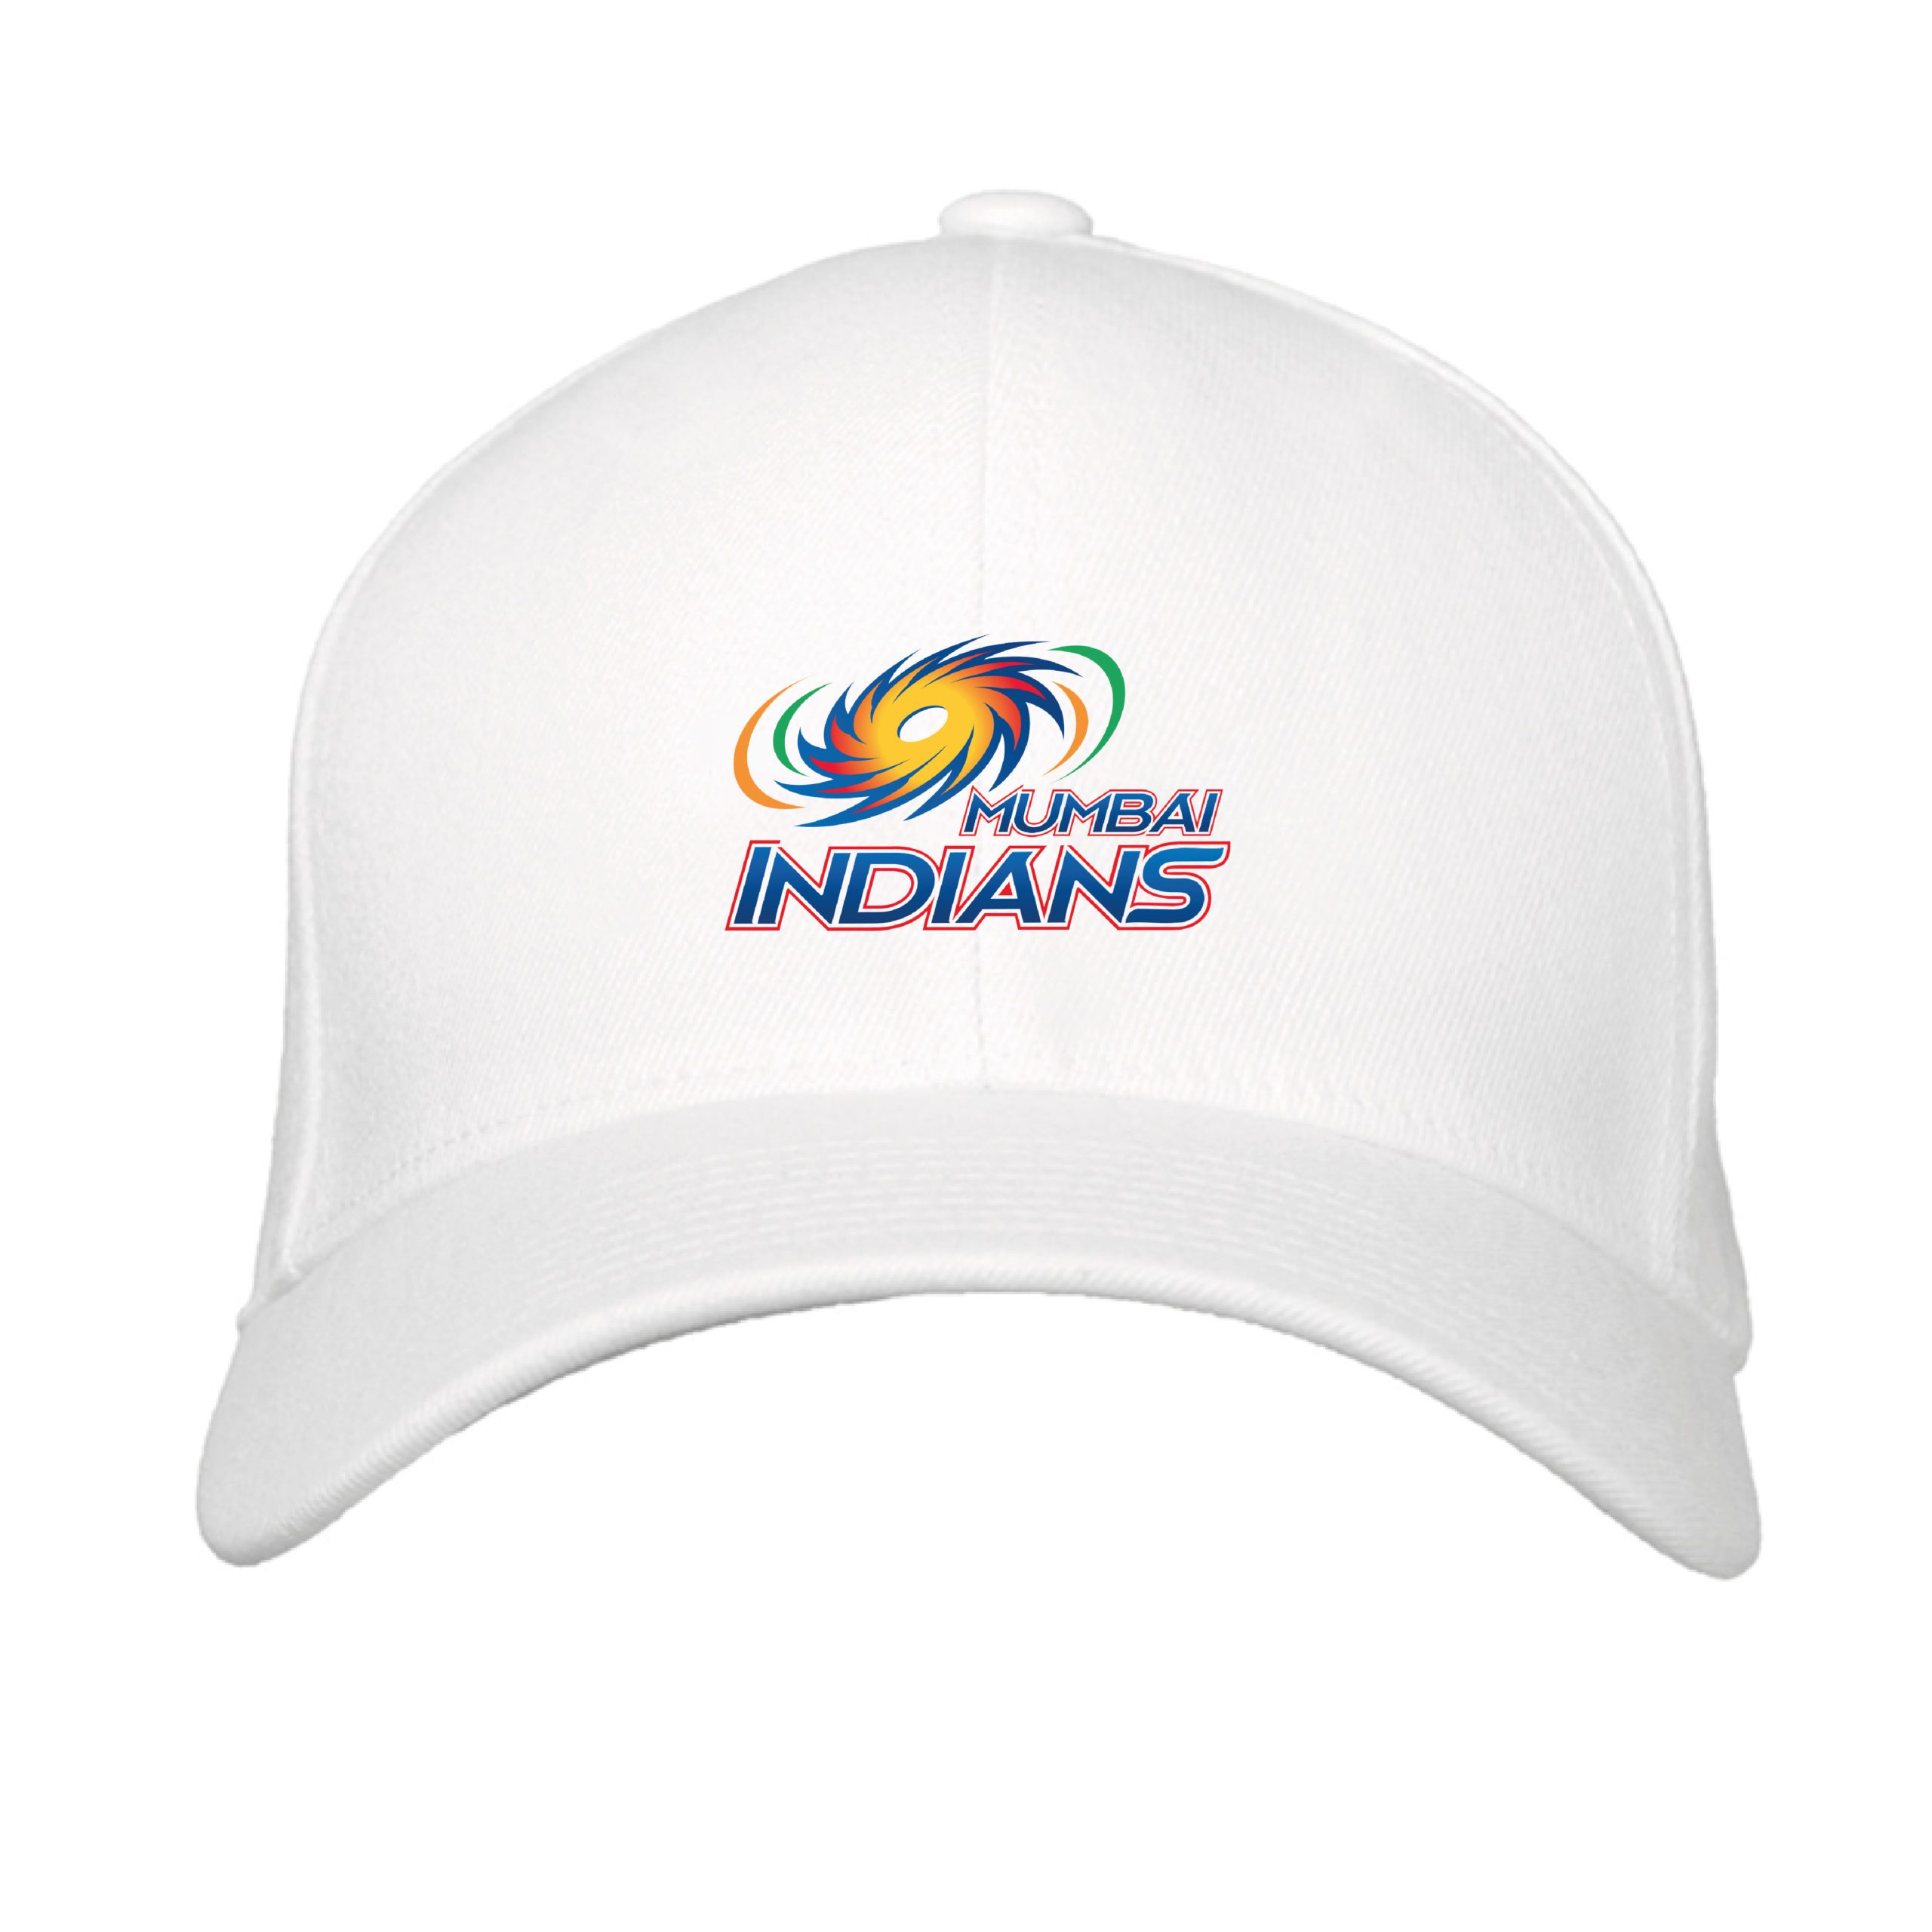 IPL MI Logo Printed Caps for Cricket Fans (Mumbai Indians )